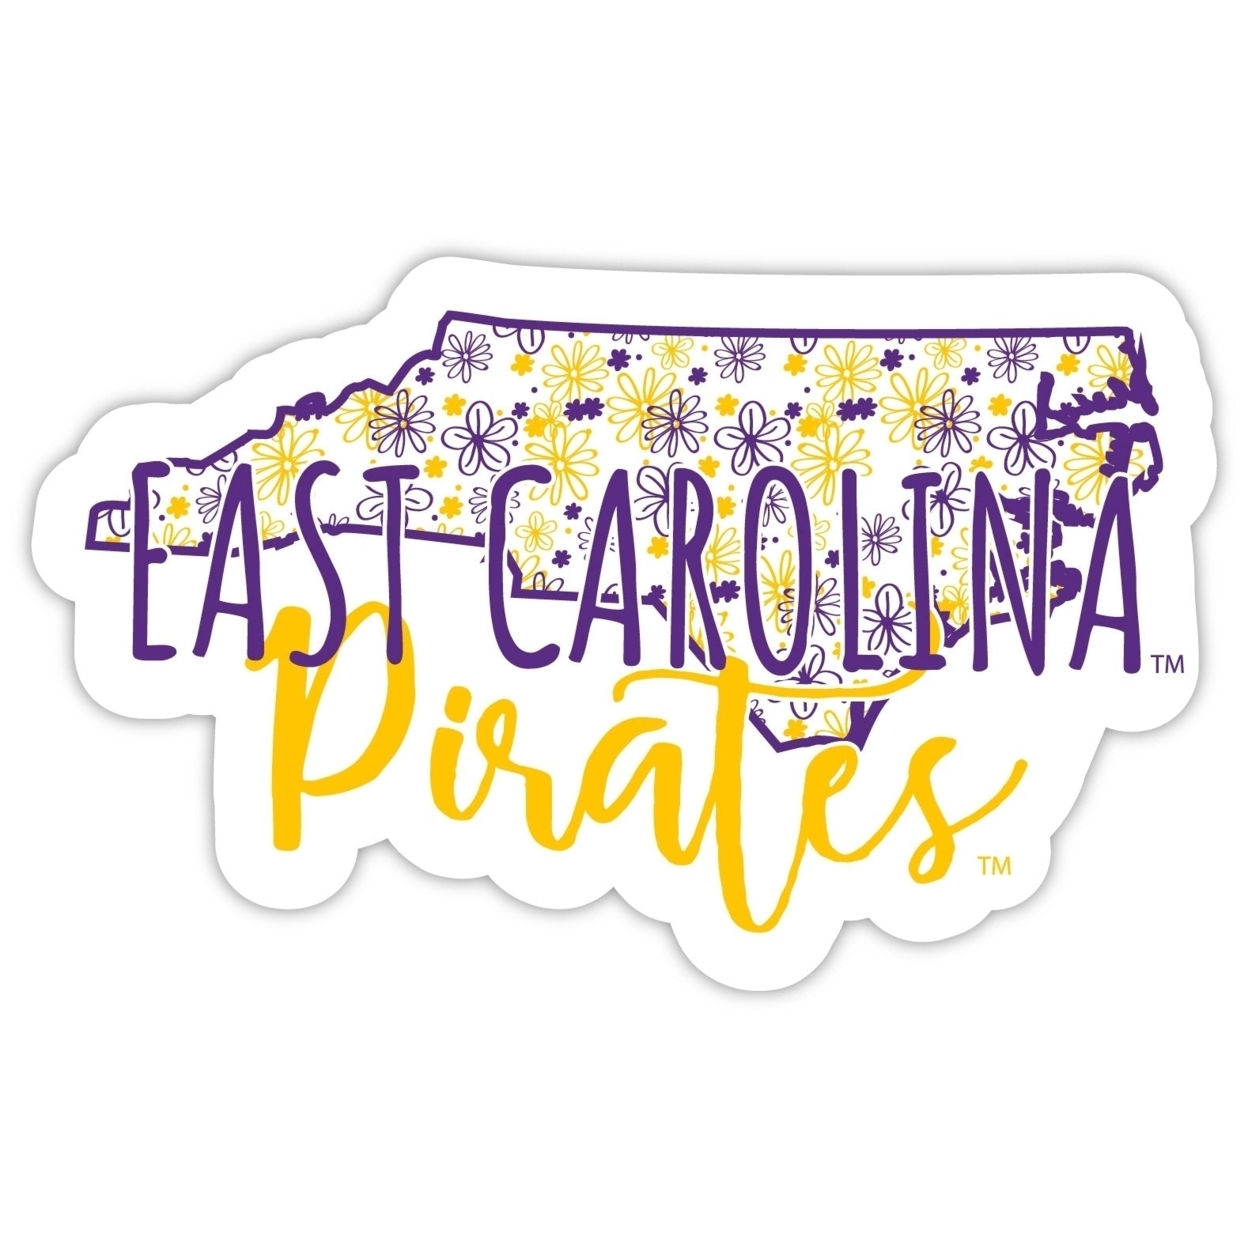 East Carolina Pirates Floral State Die Cut Decal 2-Inch